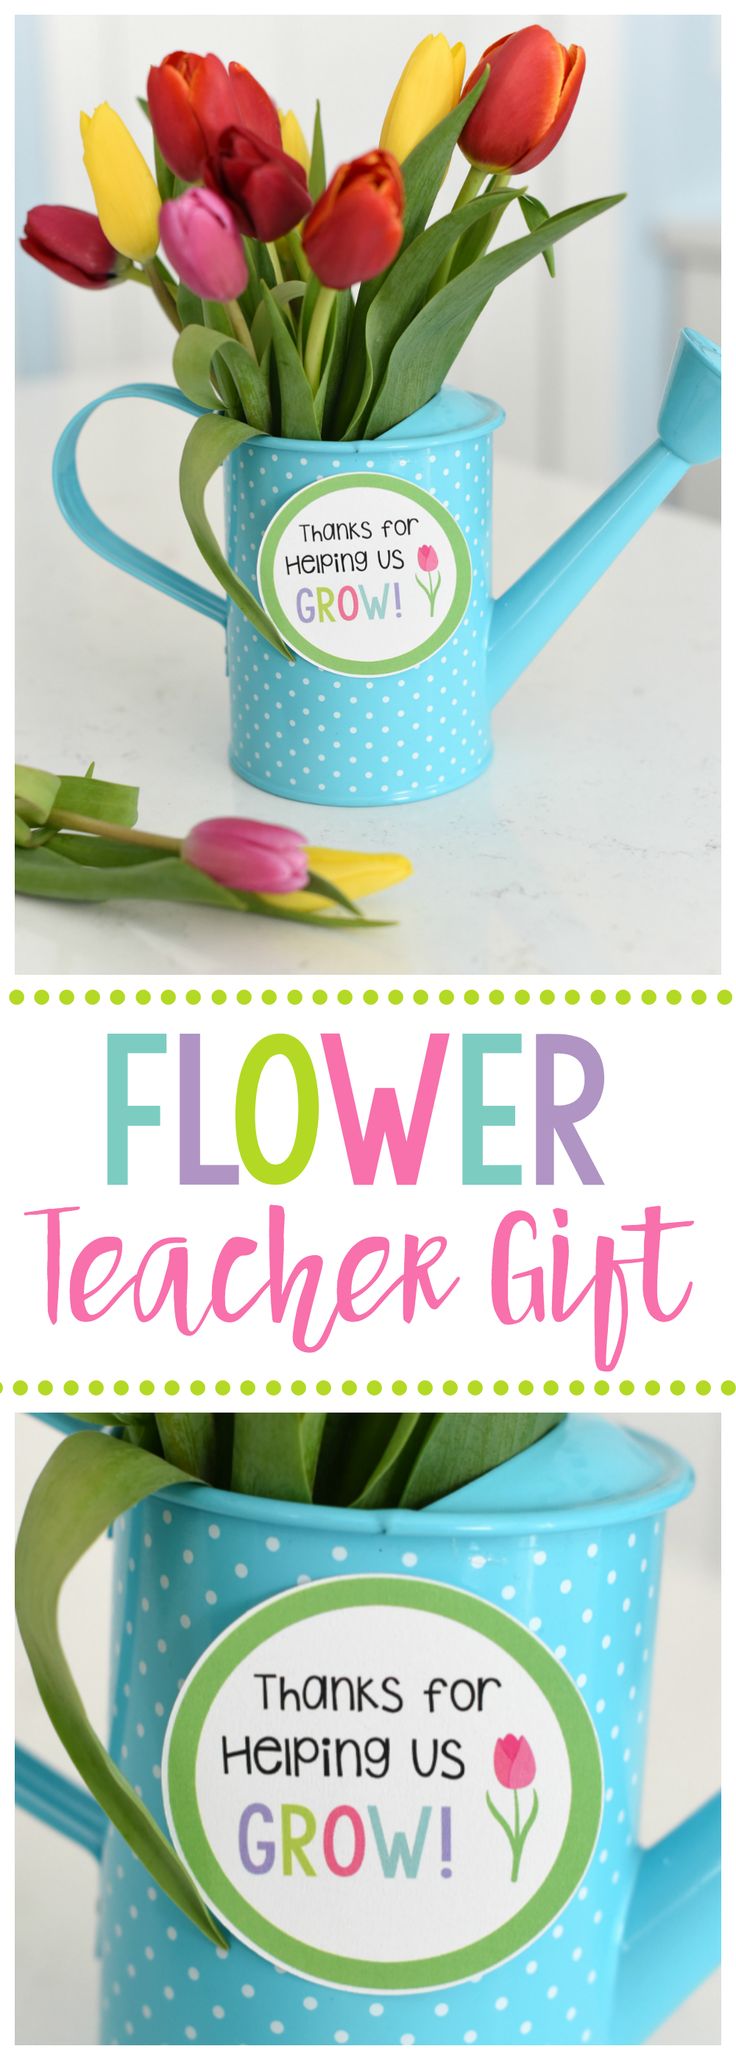 Cute Flower Teacher Gift Idea with Thanks for Helping Us Grow Tag - Teacher Gift...